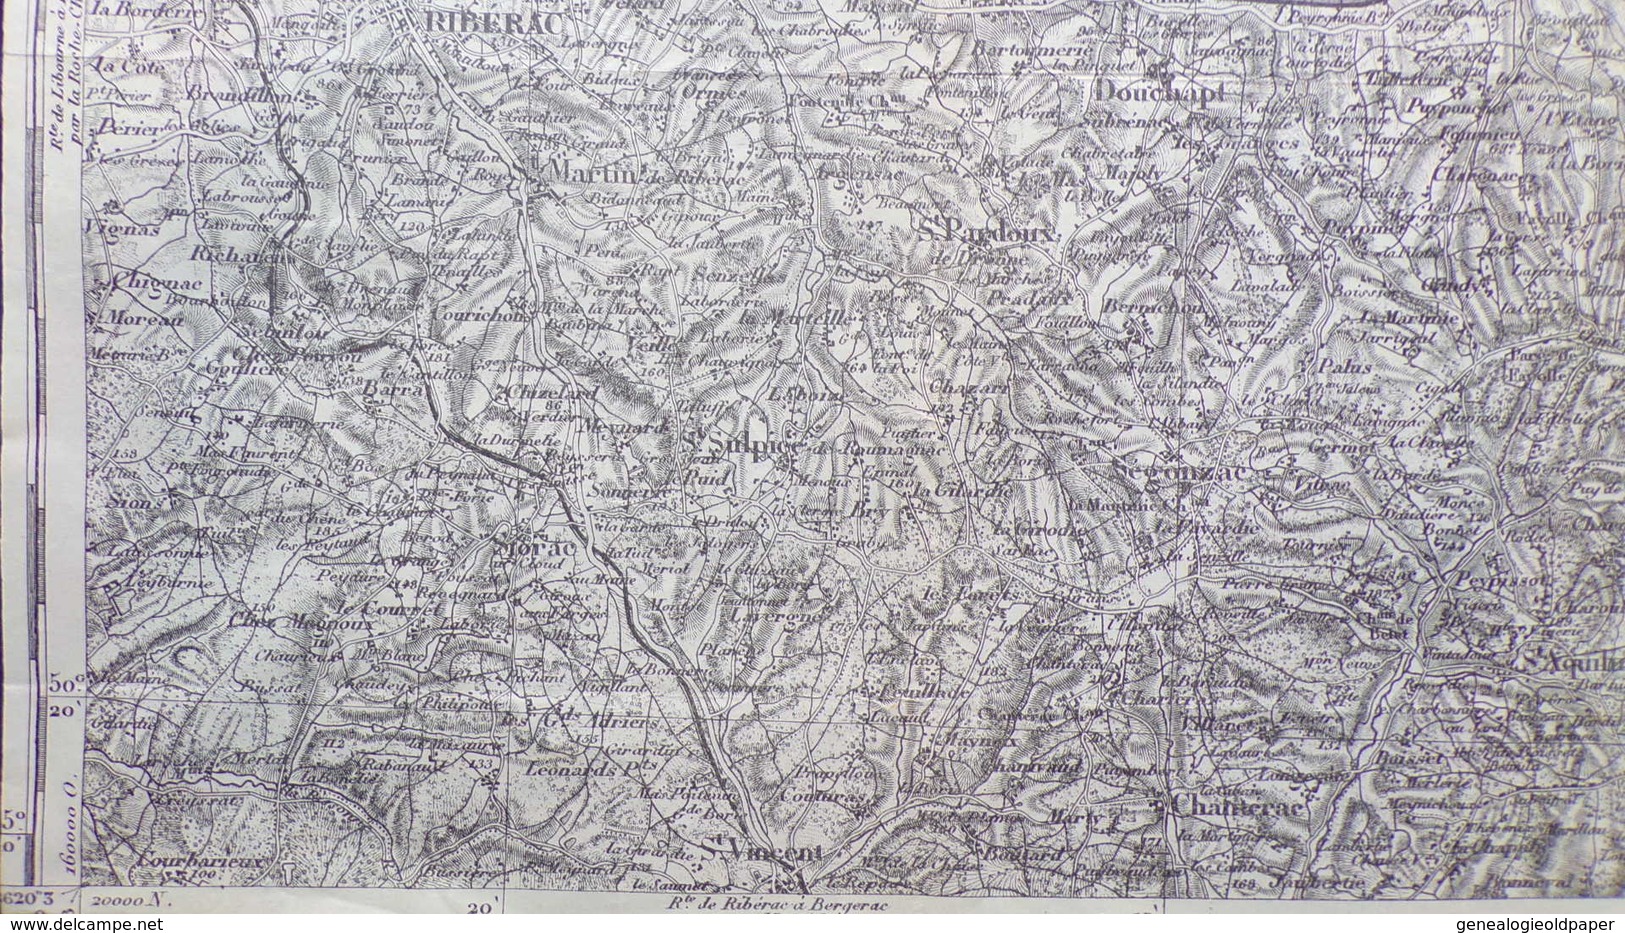 24- RARE CARTE 1909- RIBERAC-DOUCHAPT-ALLEMANS-CHAPDEUIL-MARSAC-SAINT AQUILIN-BOURDEILLES-MENSIGNAC-SIORAC-LUSIGNAC - Cartes Topographiques